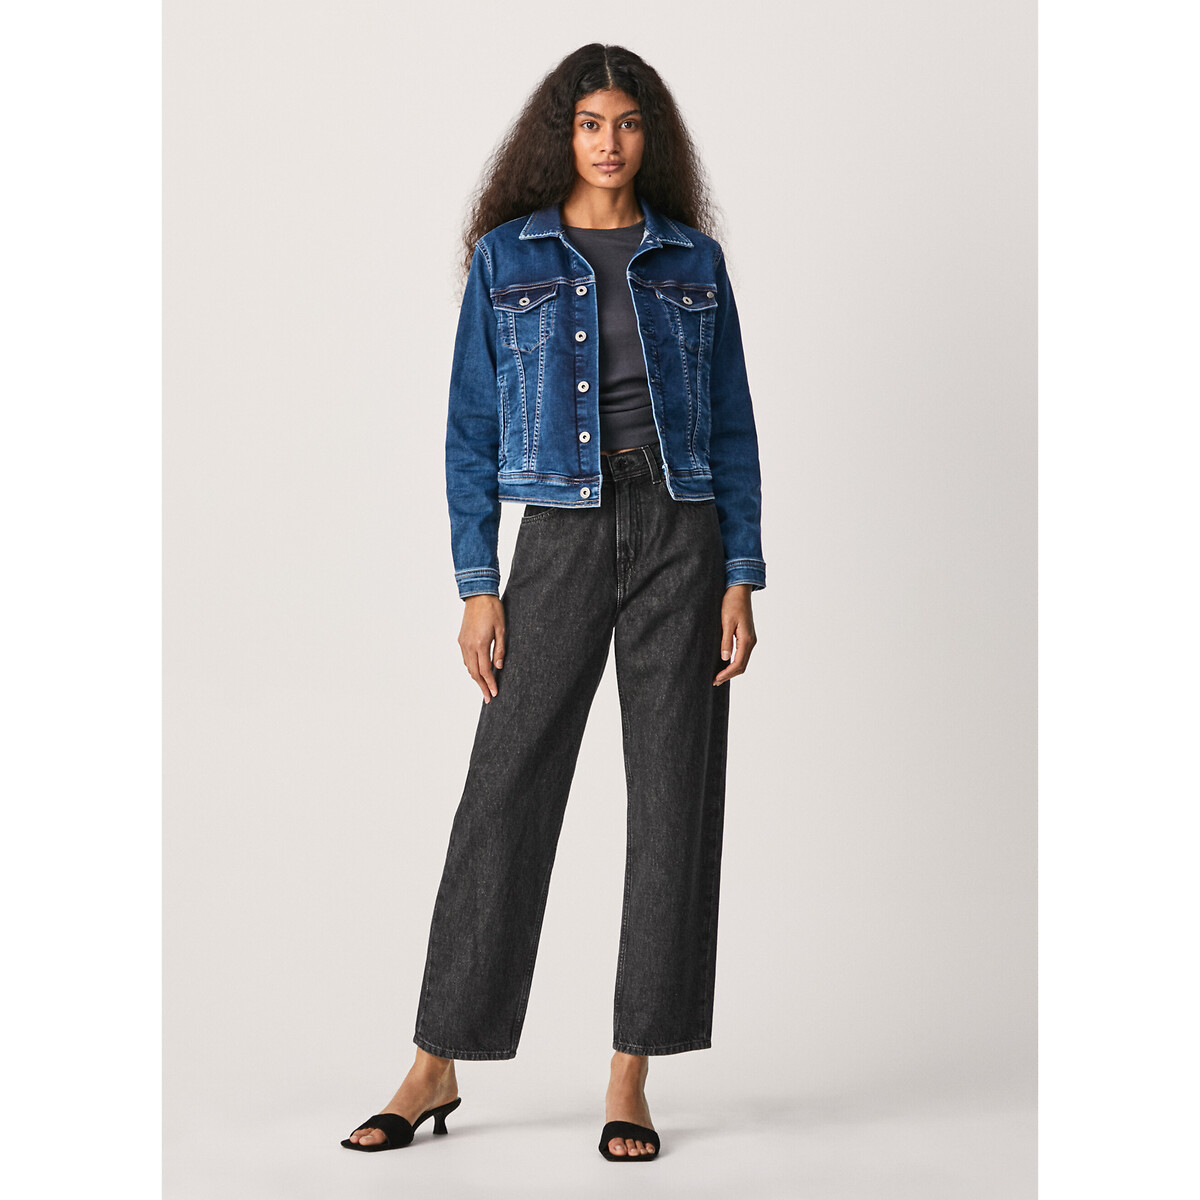 Жакет Короткий из джинсовой ткани XS синий LaRedoute, размер XS - фото 3